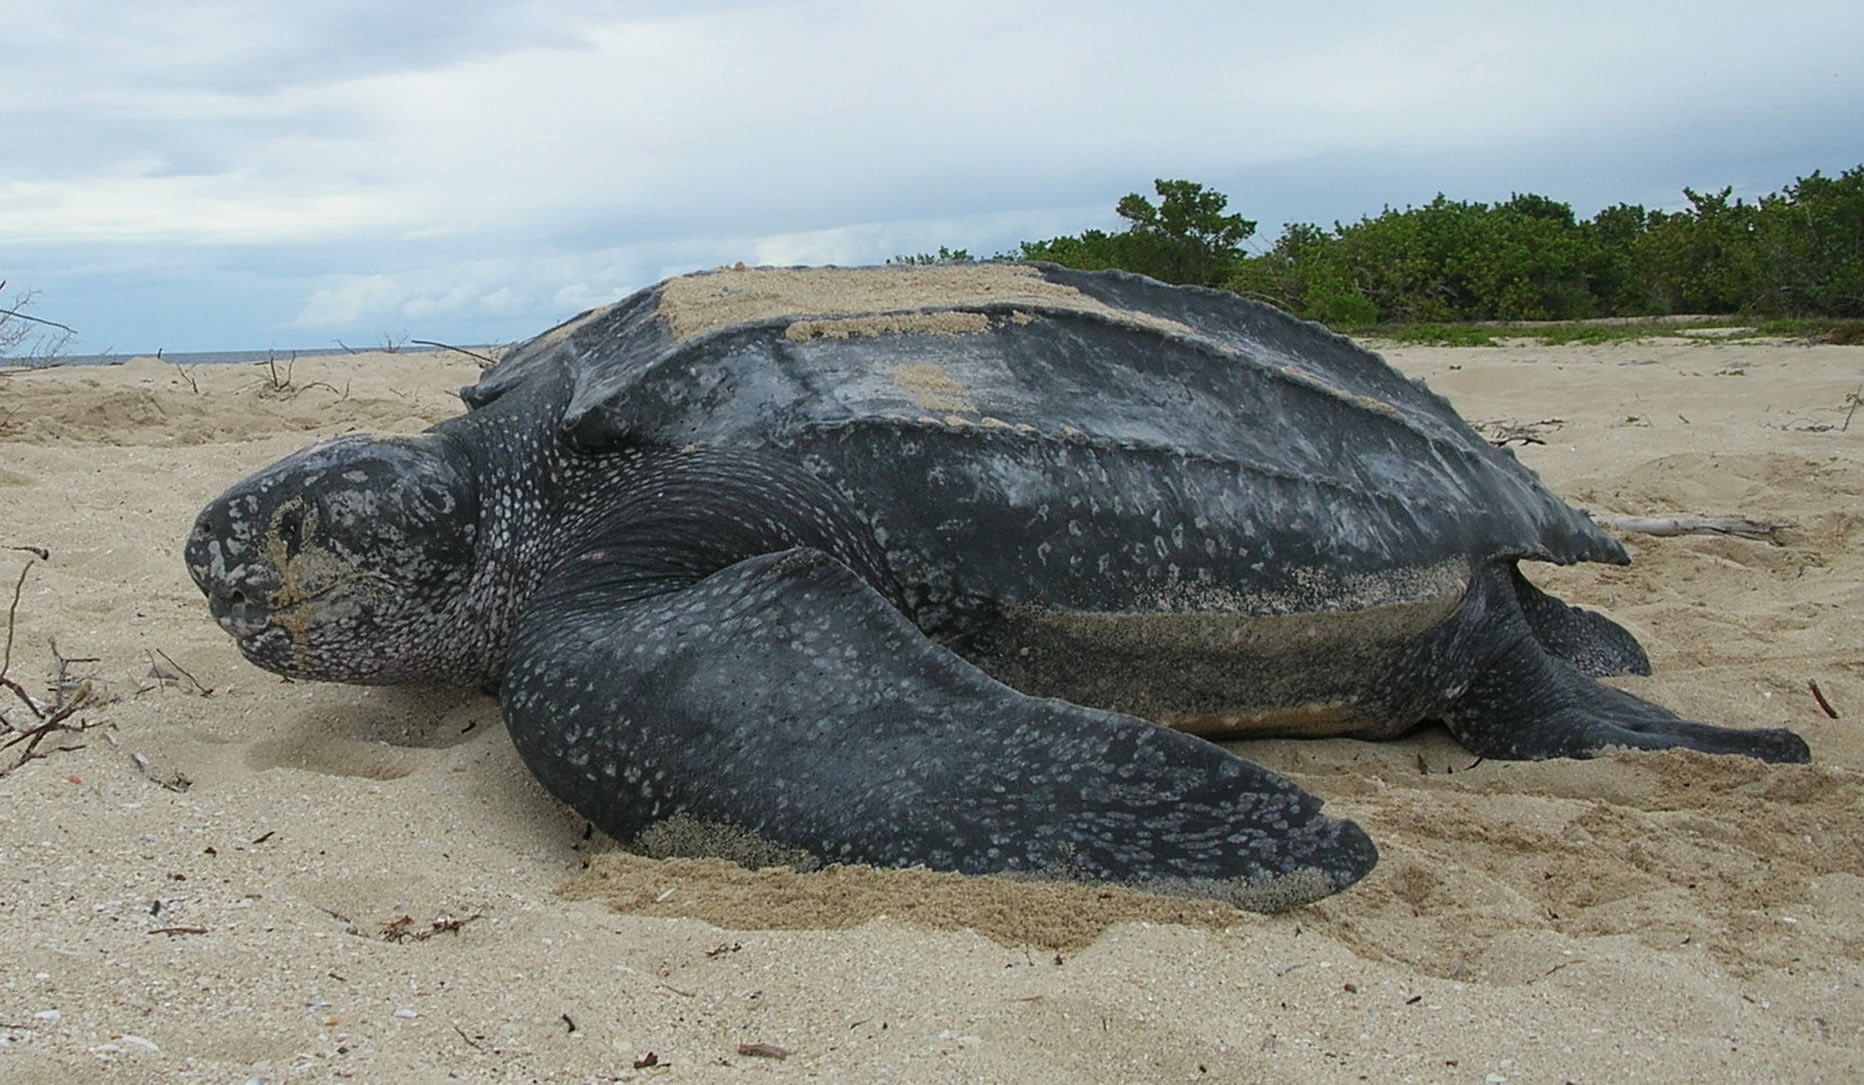 Large leatherback sea turtle on a beach. PC - U.S. Fish and Wildlife Service Southeast Region